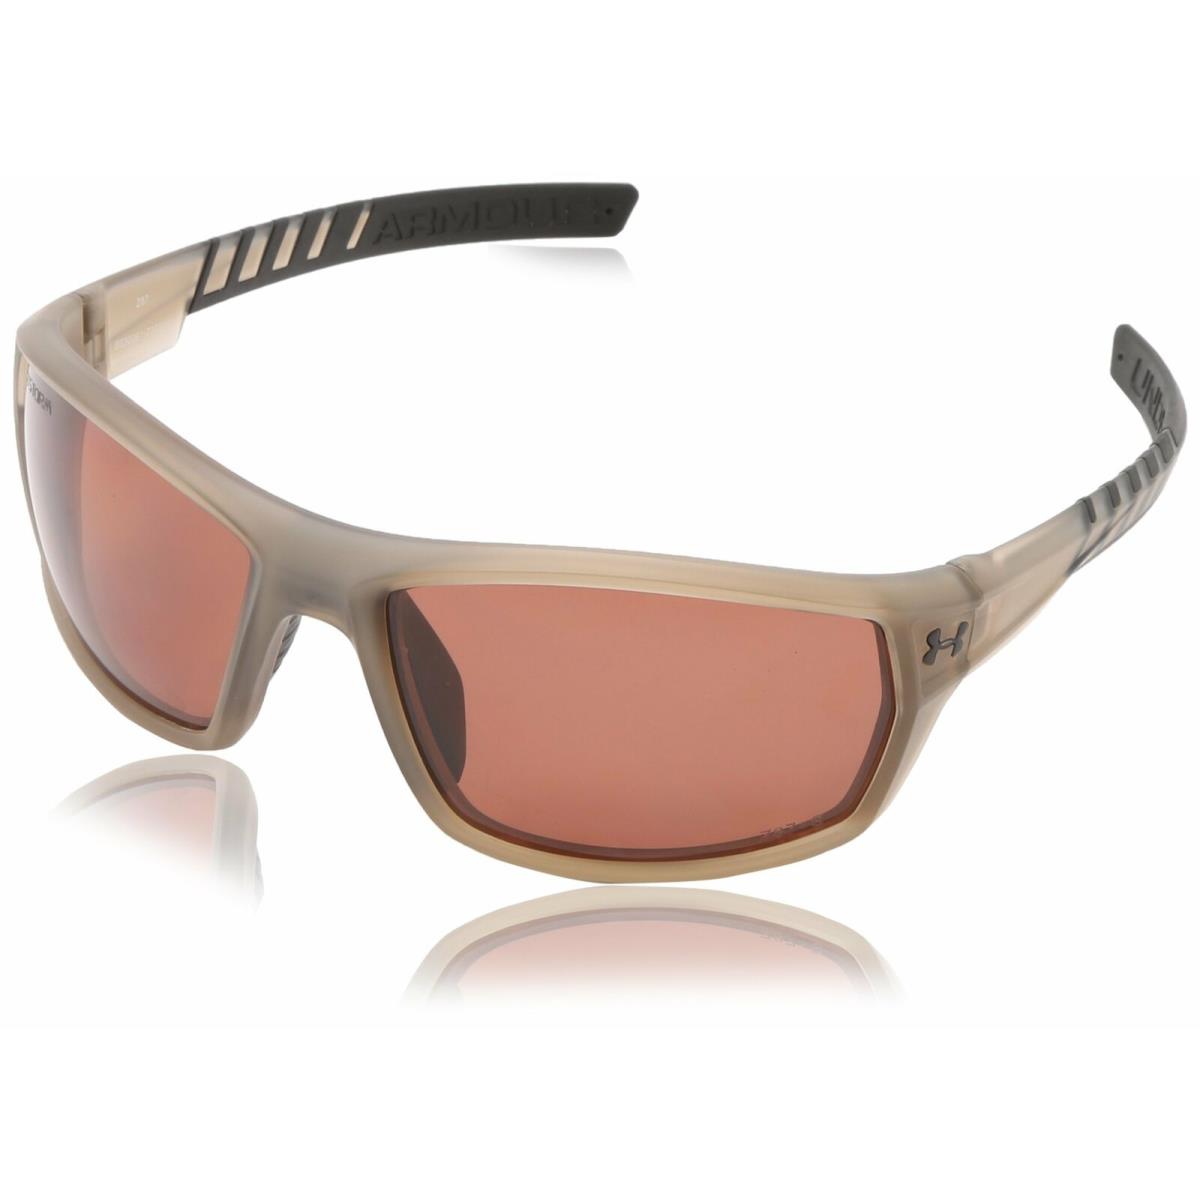 Under Armour Ranger Brown Polarized Sport Sunglasses Ansi Z87.1 Impact Resistant - Frame: Brown, Lens: Brown, Manufacturer: Frame: Crystal brown Lenses: Brown Storm polarized